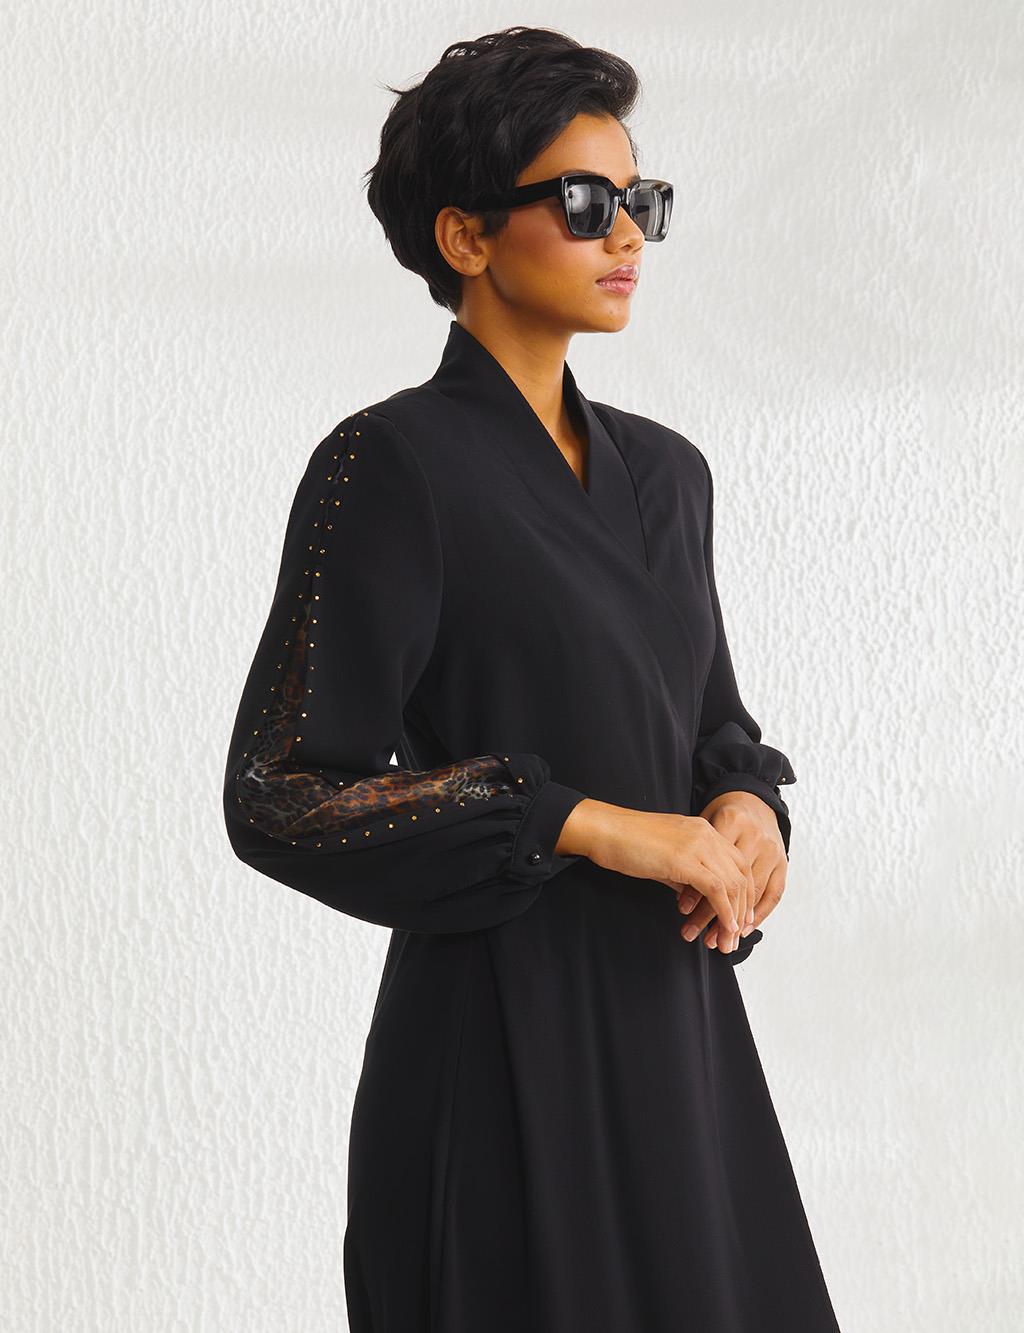 Sleeve Detailed Long Wear & Go Black